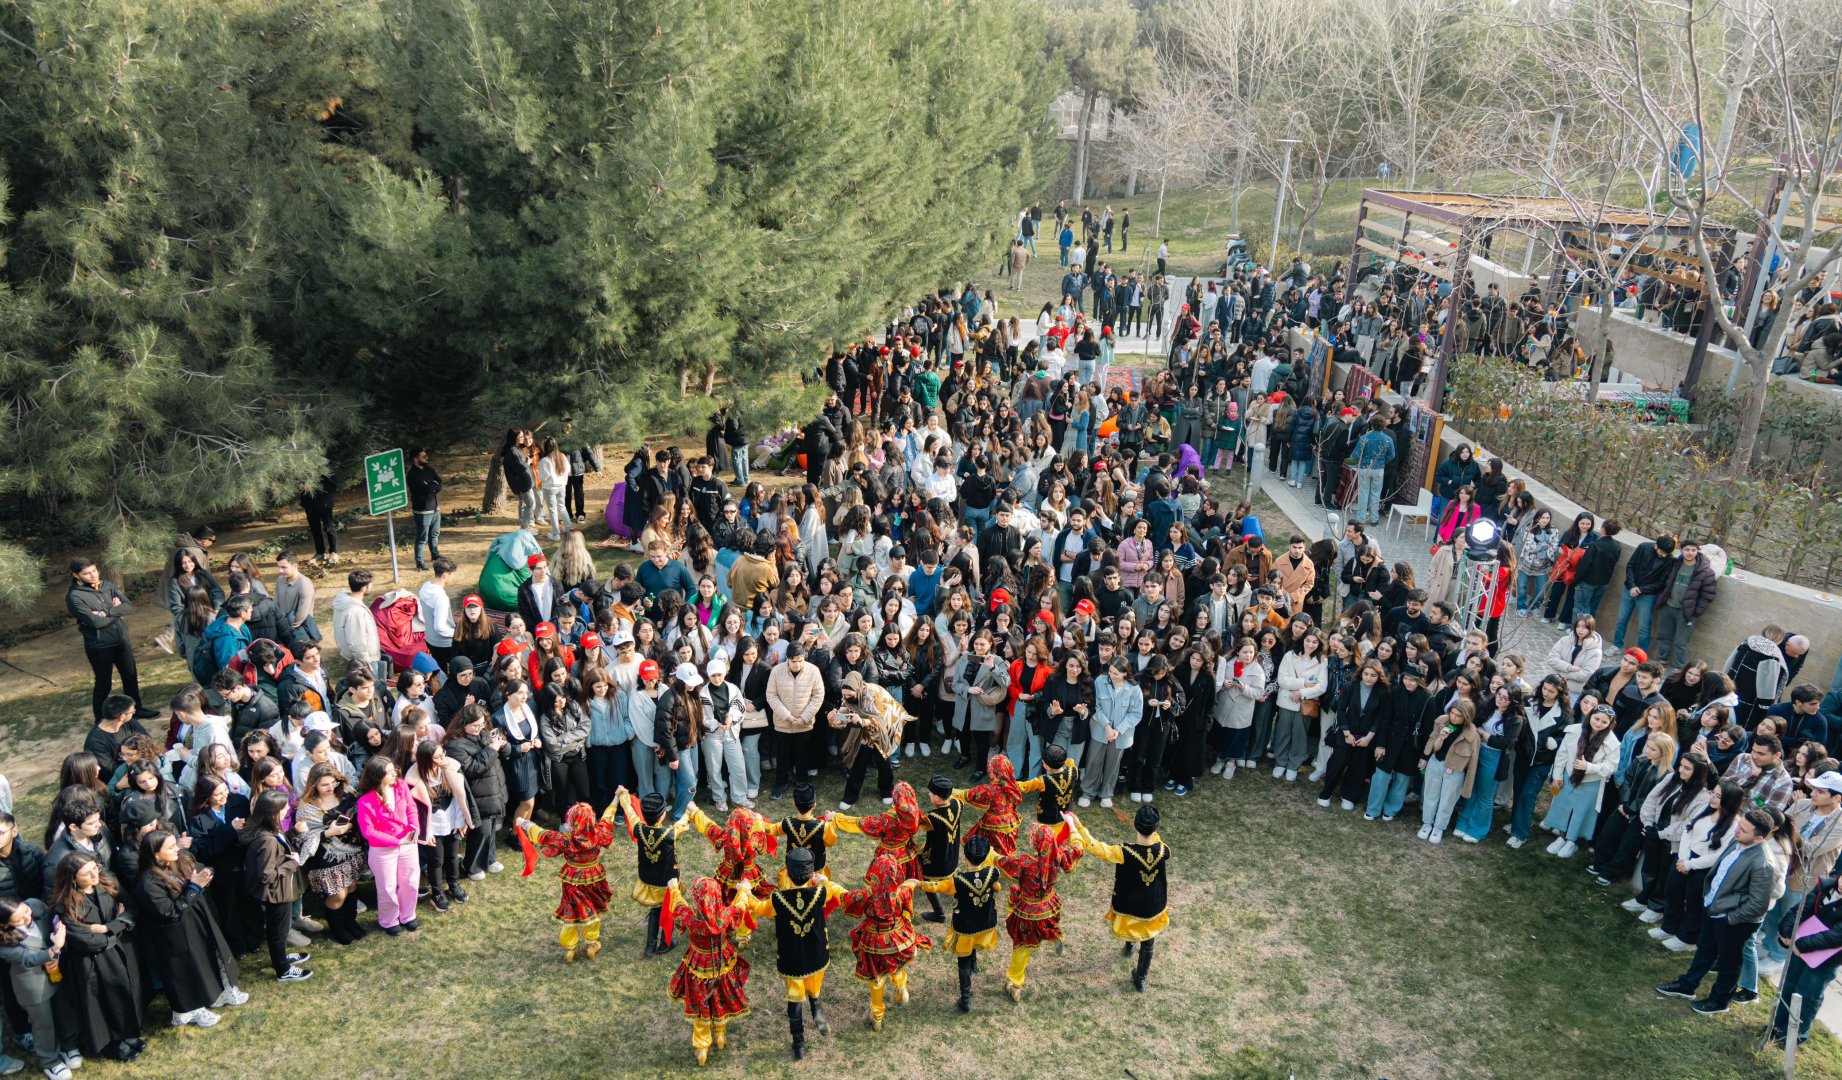 ADA Universitetində 10-cu Bahar Gənclik Festivalı keçirilib (FOTO/VİDEO)